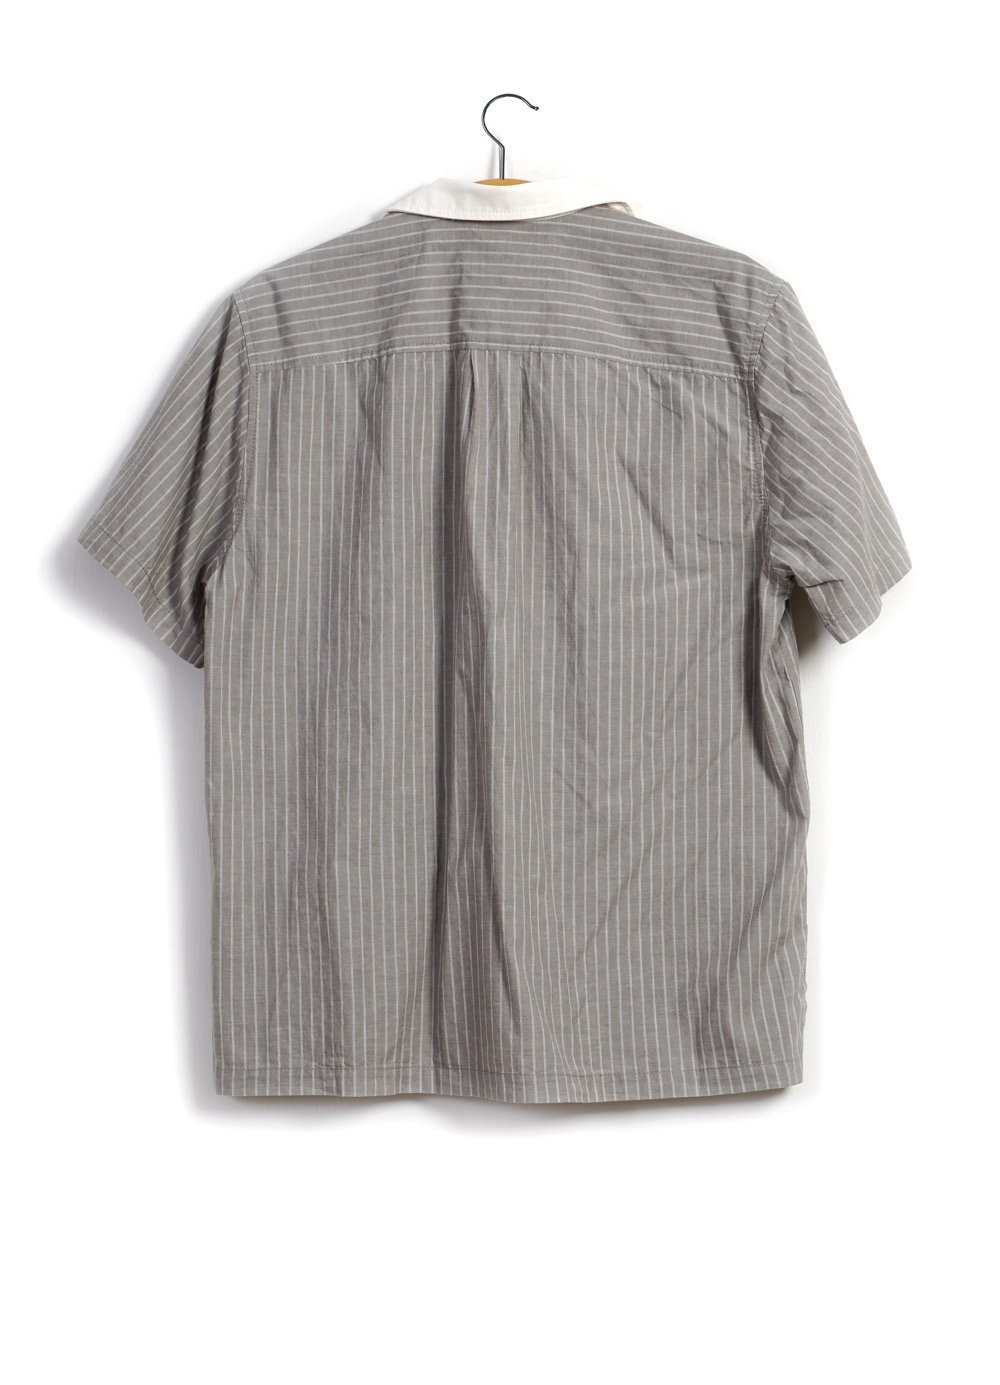 PHILLIP | Short Sleeve Pull-On Shirt | Stripe/Nature -HANSEN Garments- HANSEN Garments